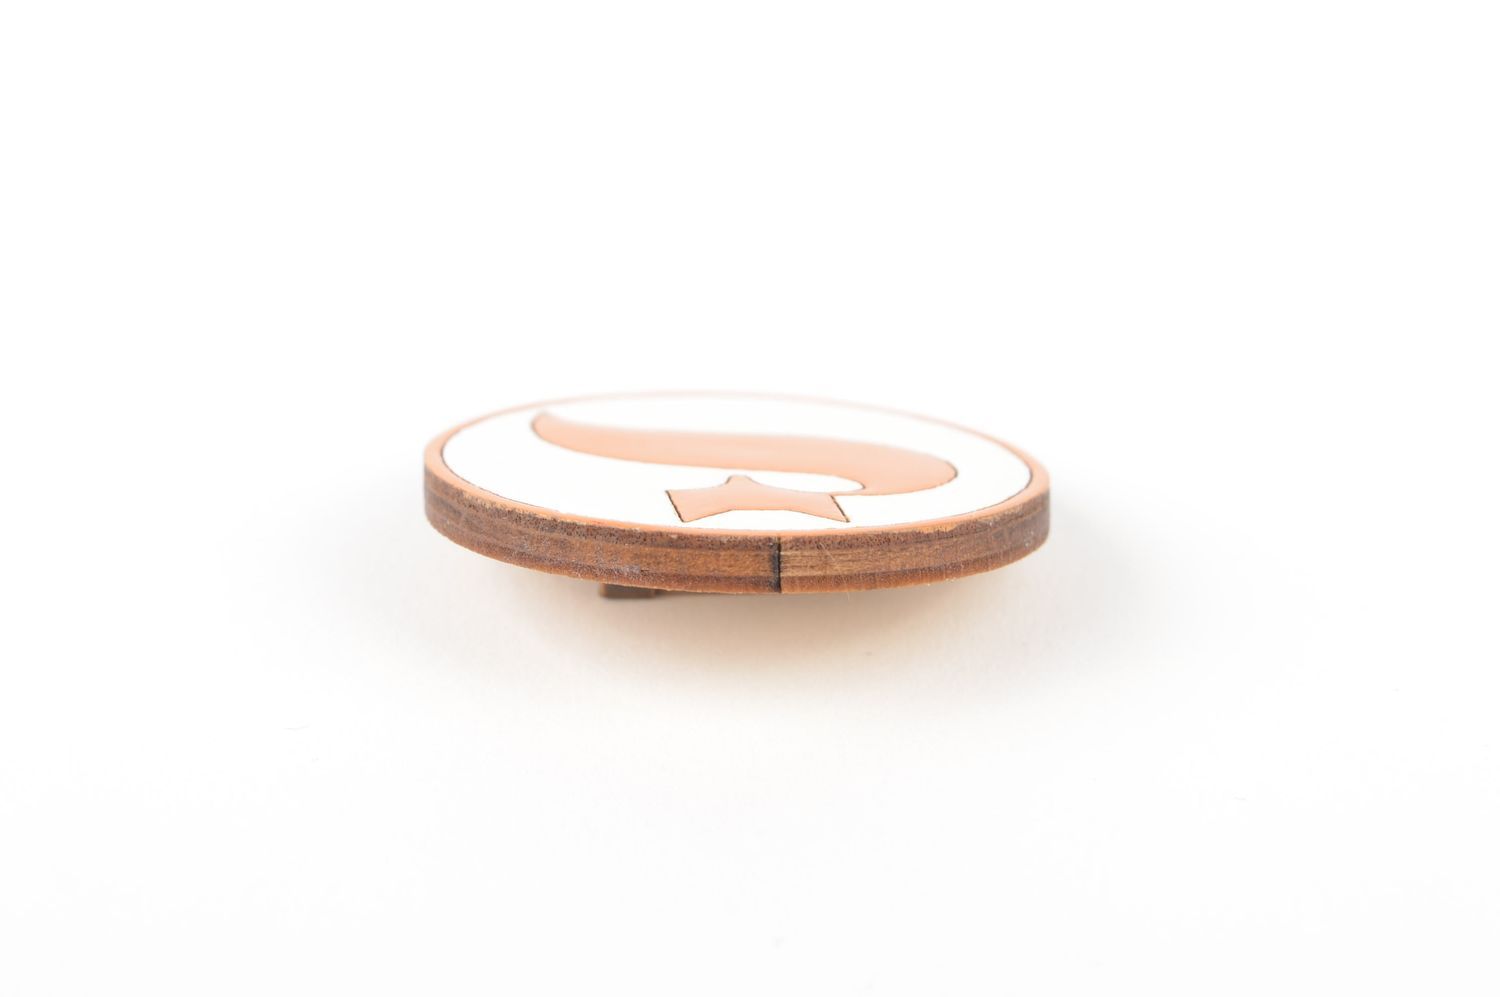 Handmade designer wooden brooch stylish round brooch elegant jewelry gift photo 4